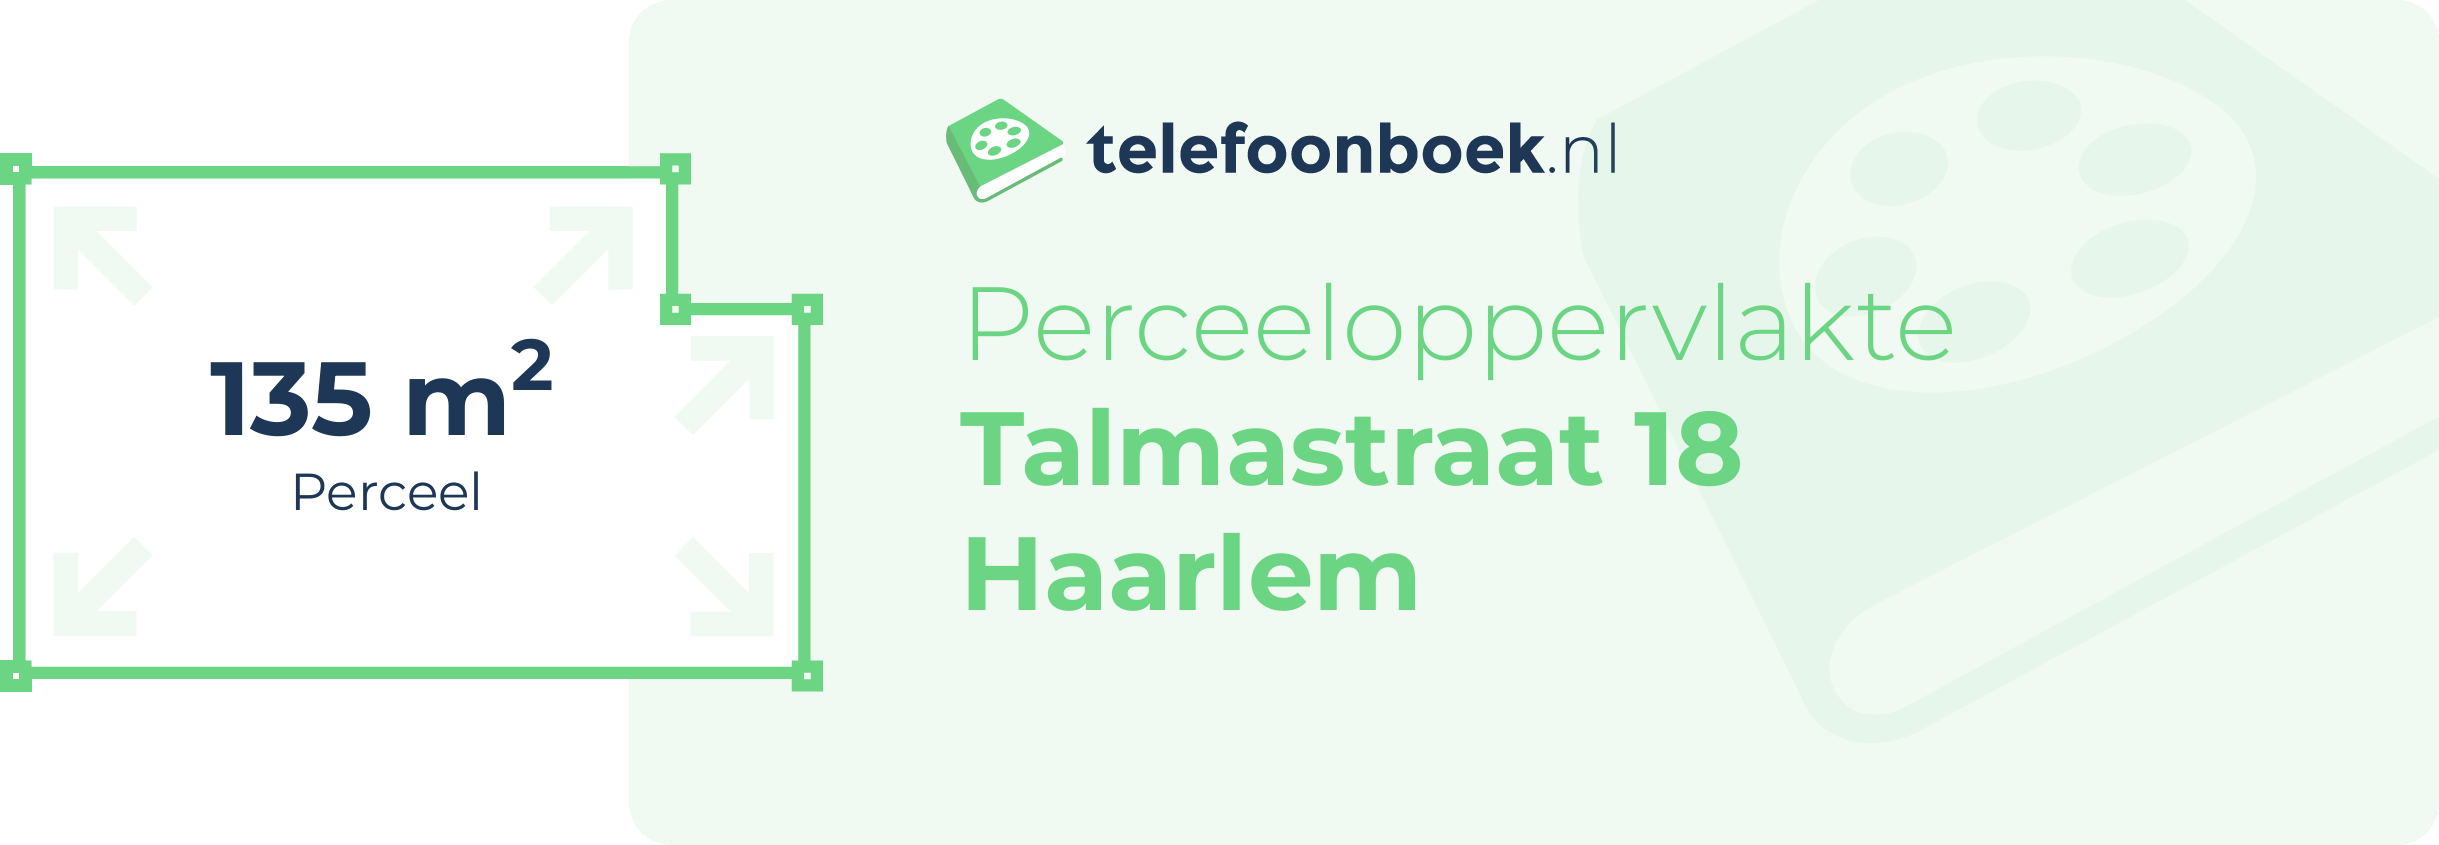 Perceeloppervlakte Talmastraat 18 Haarlem